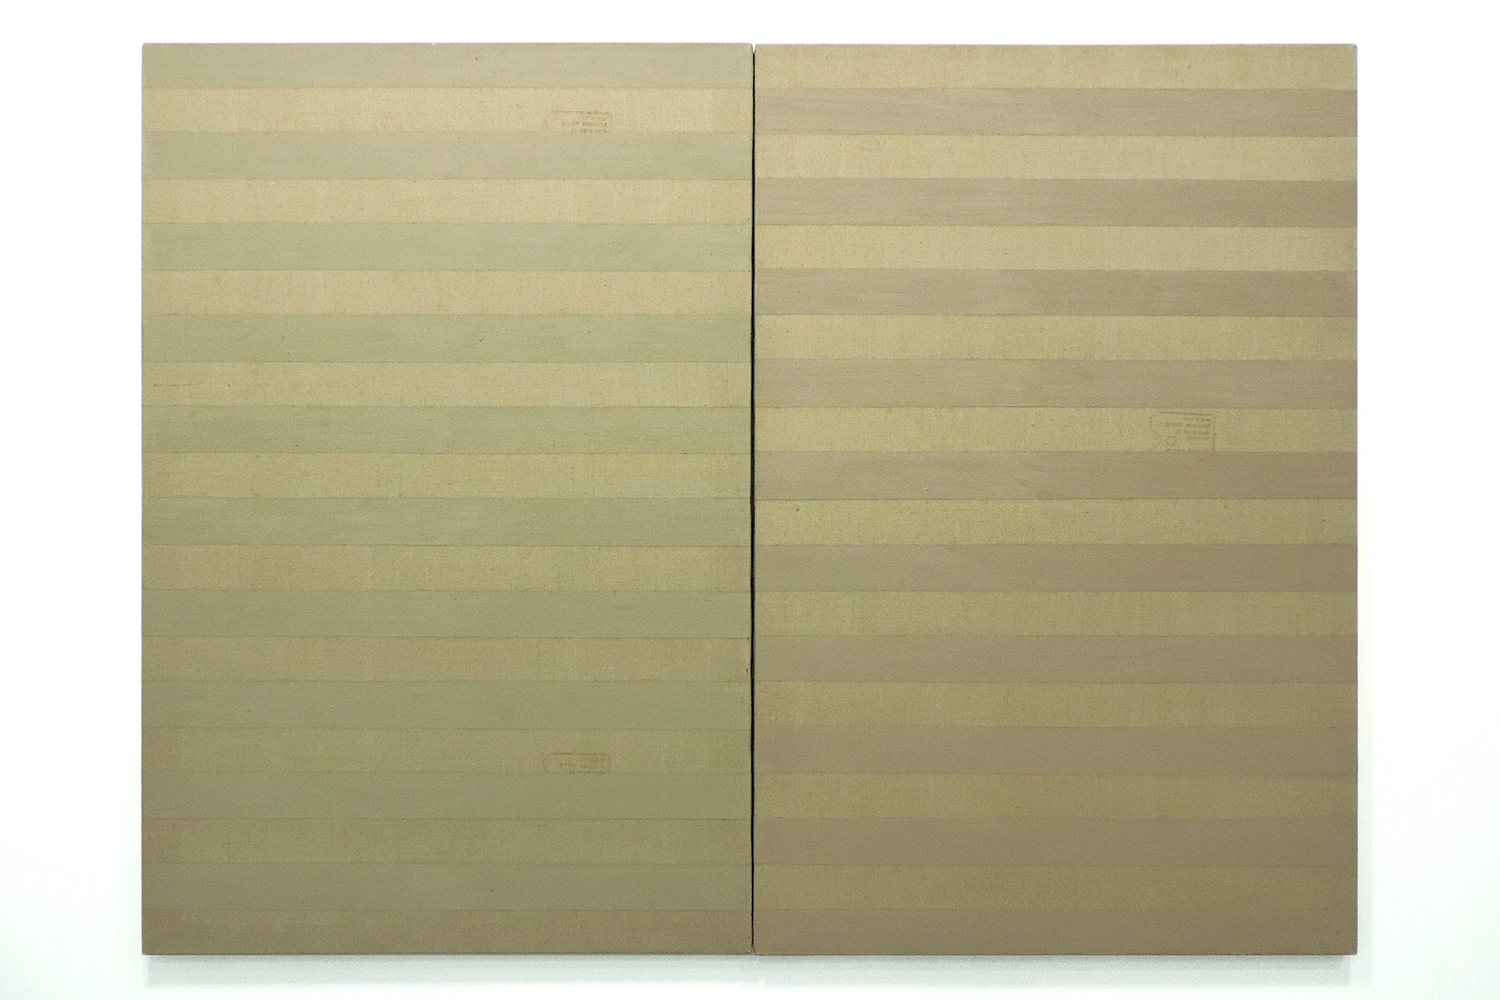 Untitled-OCHER　/ Oil on Canvas,145.5 x 194 cm,1973 (2 panels)